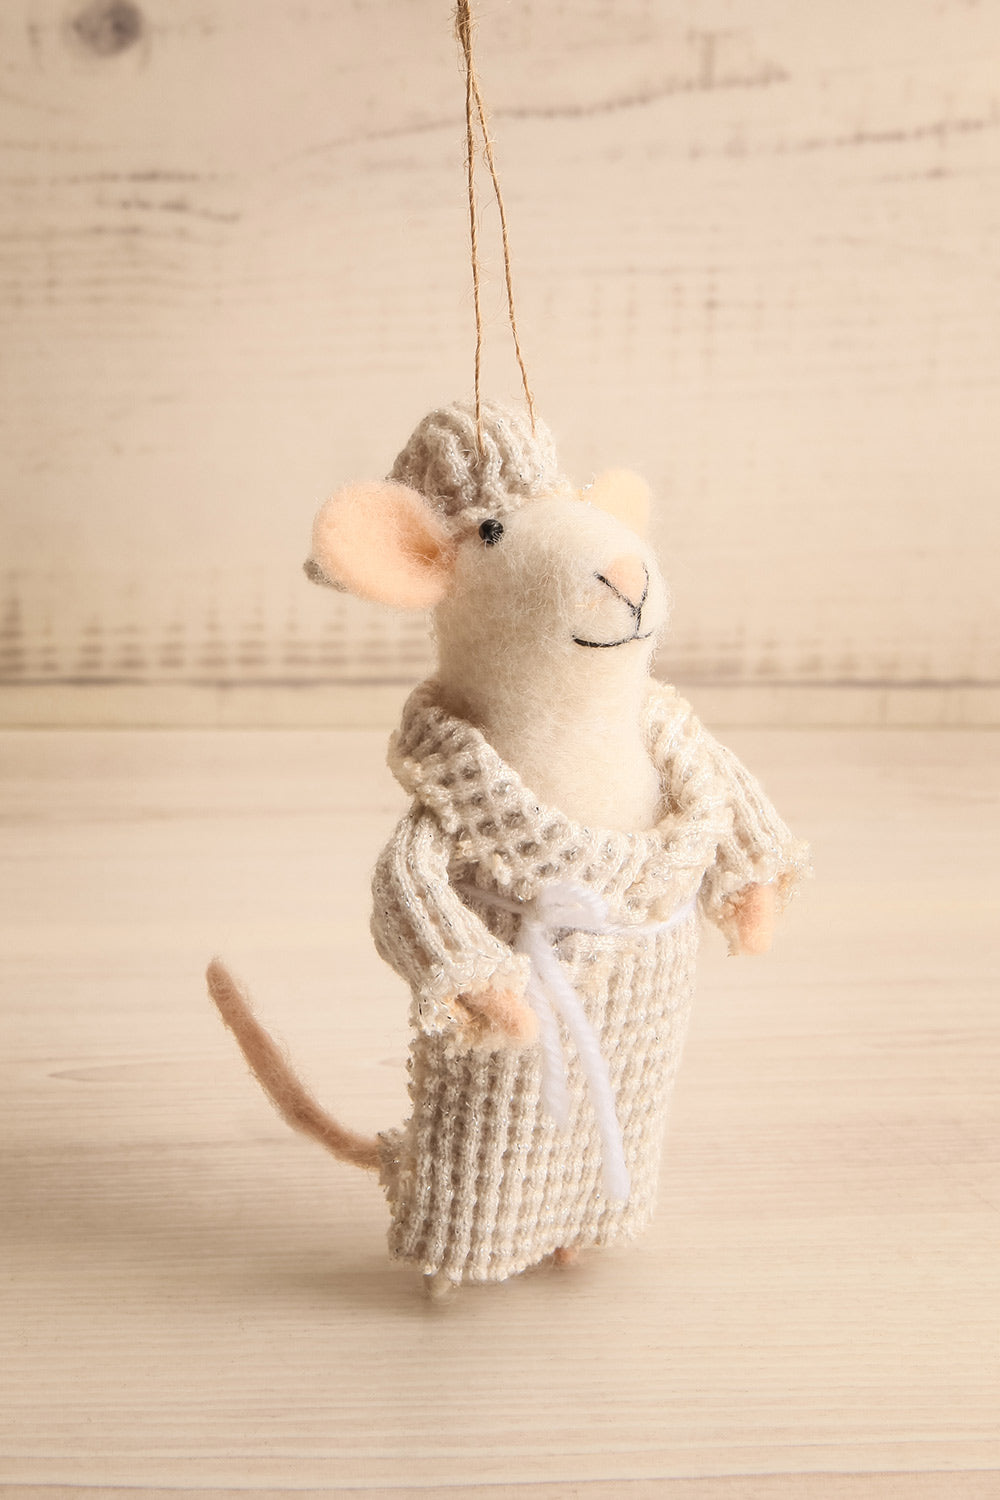 Pyjama Mouse Holiday Ornament | Maison garçonne stella